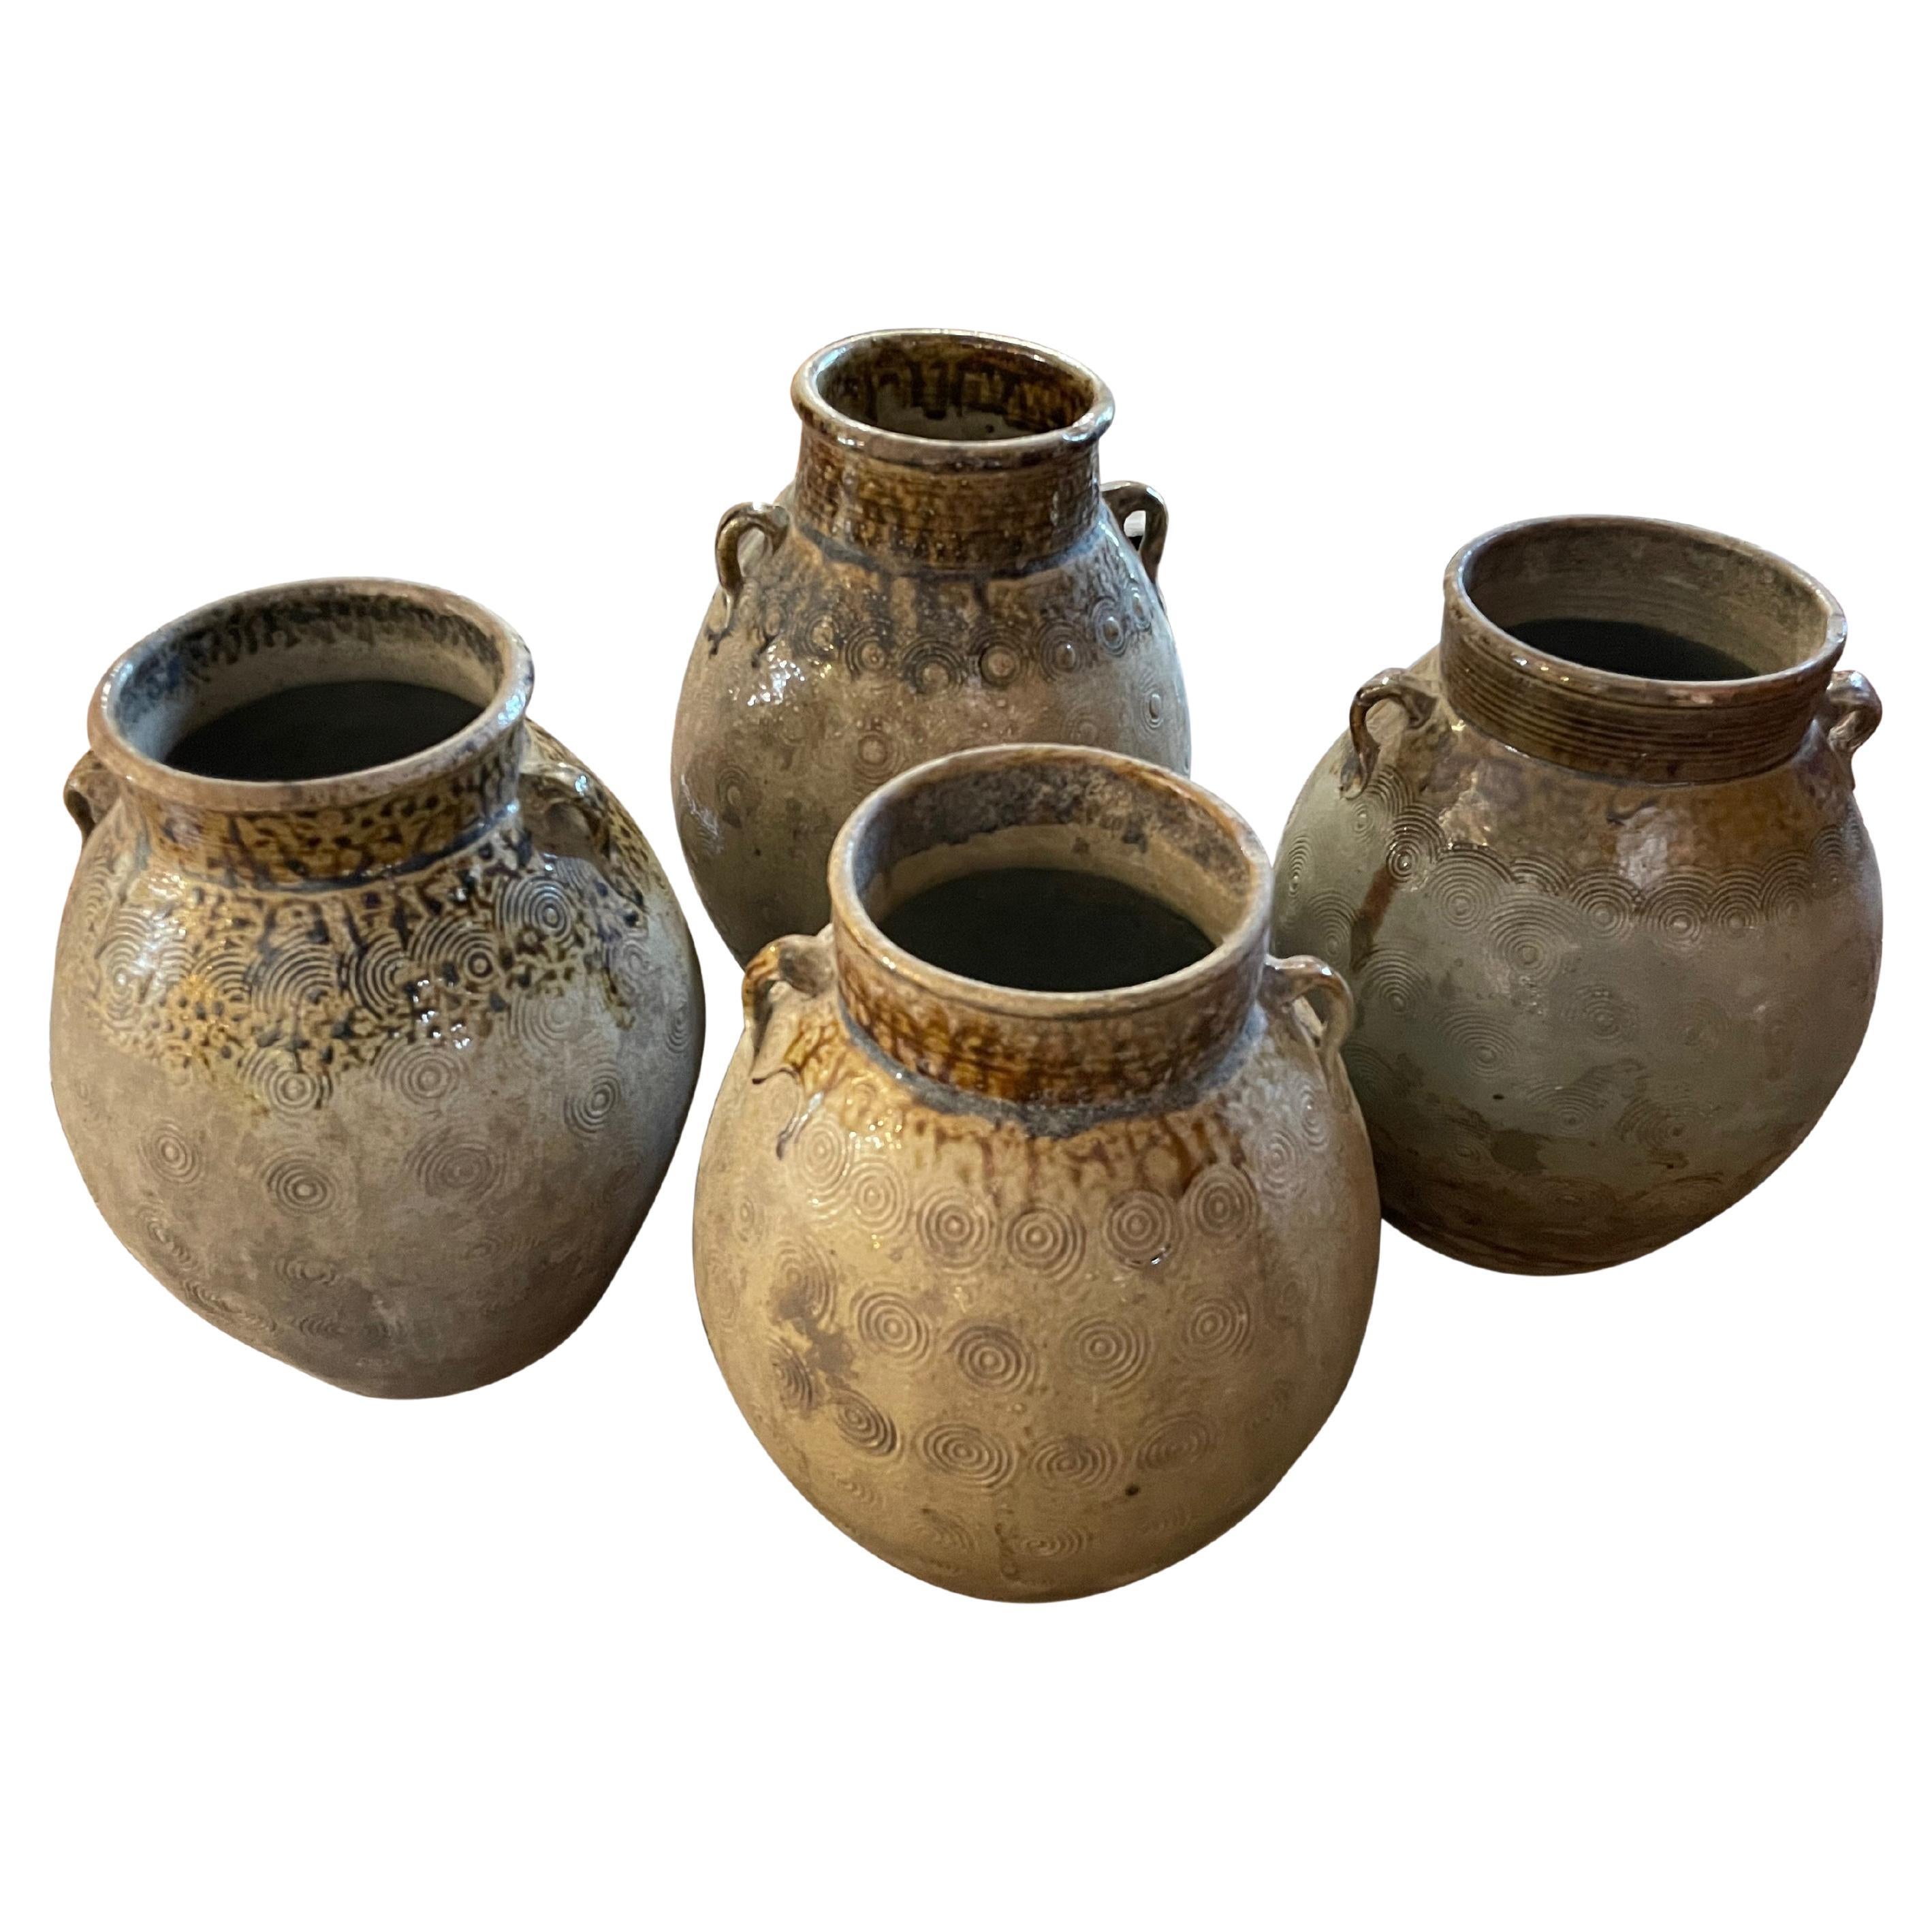 Brown Patterned Ceramic Vase, China, 19th Century